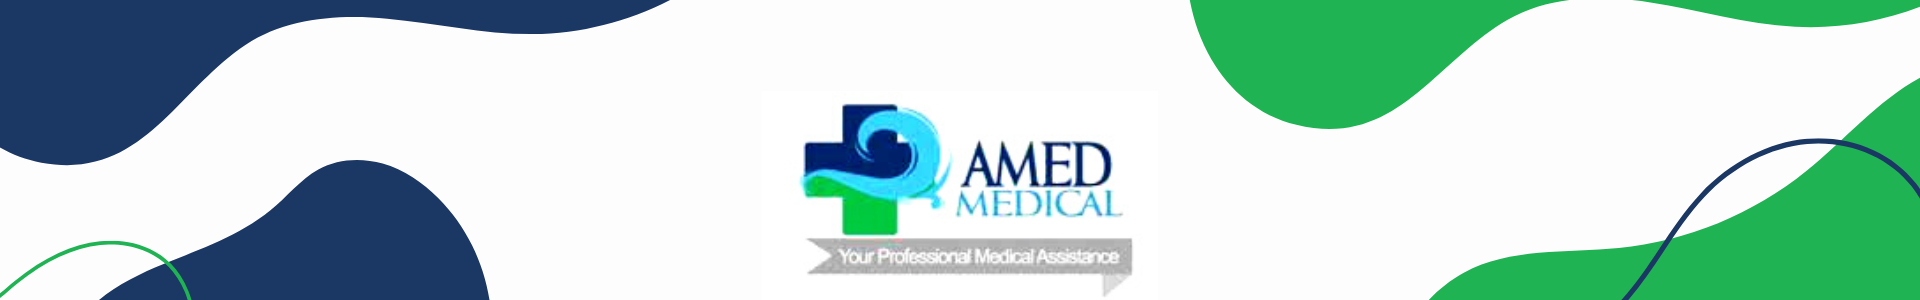 Marca Amed Medical